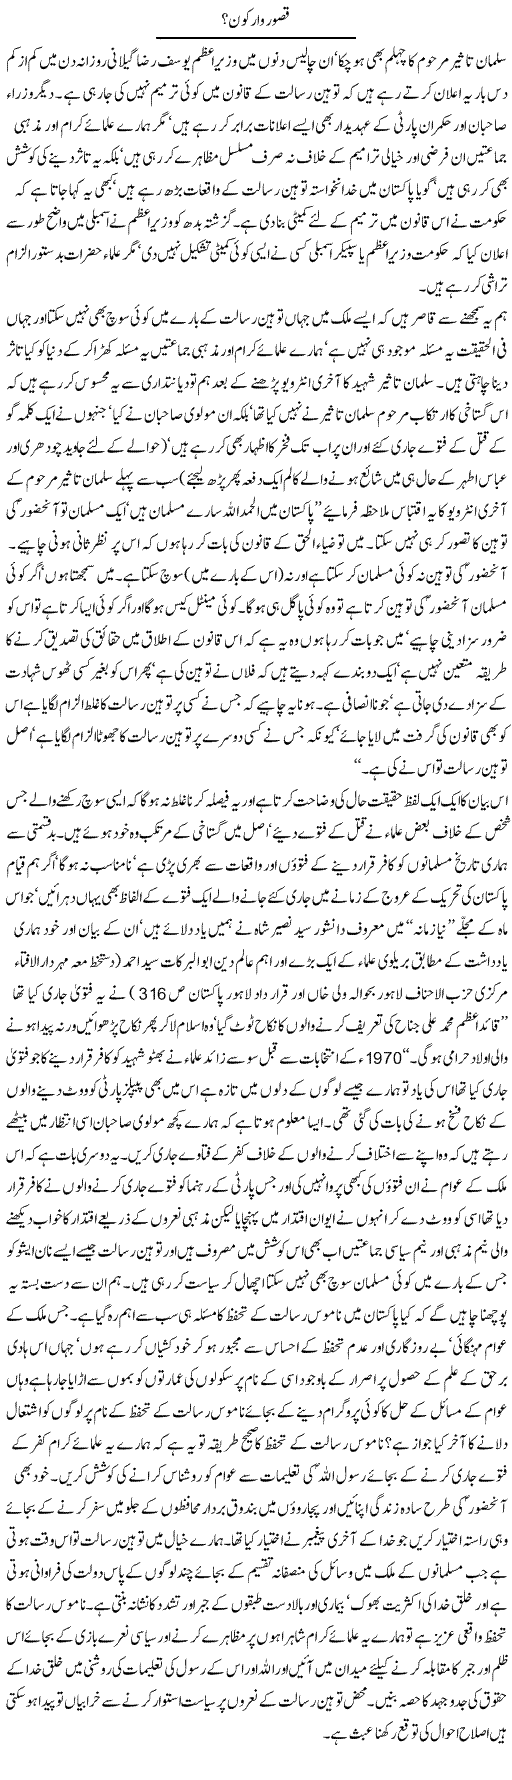 Namoos Risalat Express Column Hameed Akhtar 7 February 2011